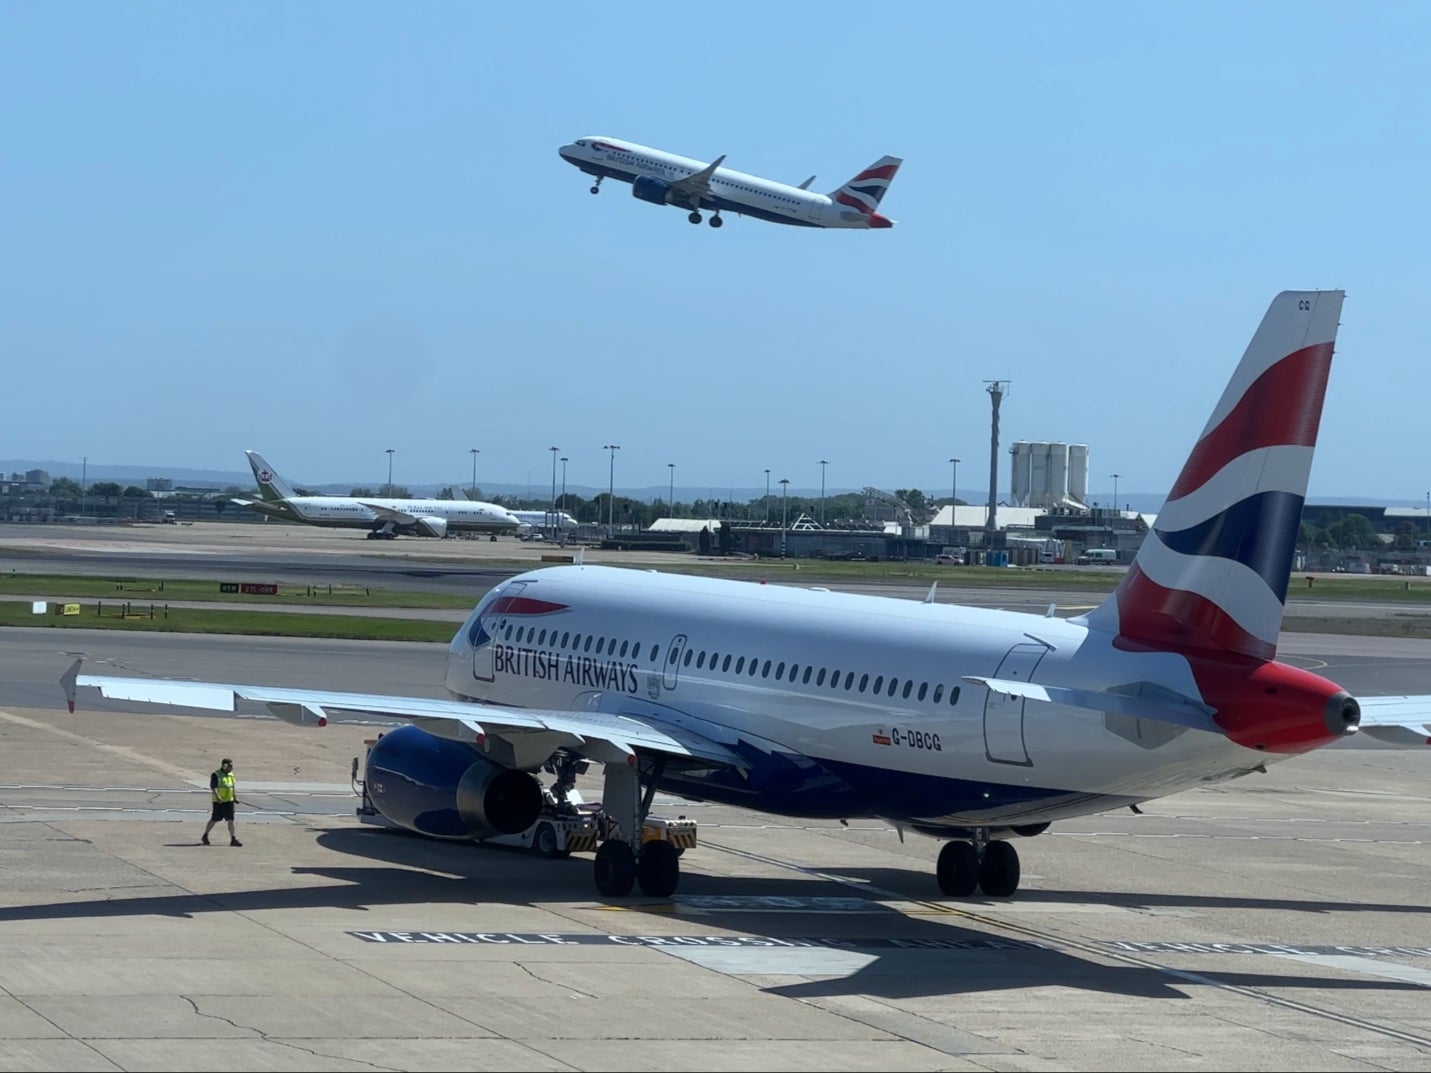 On point: British Airways aircraft at London Heathrow